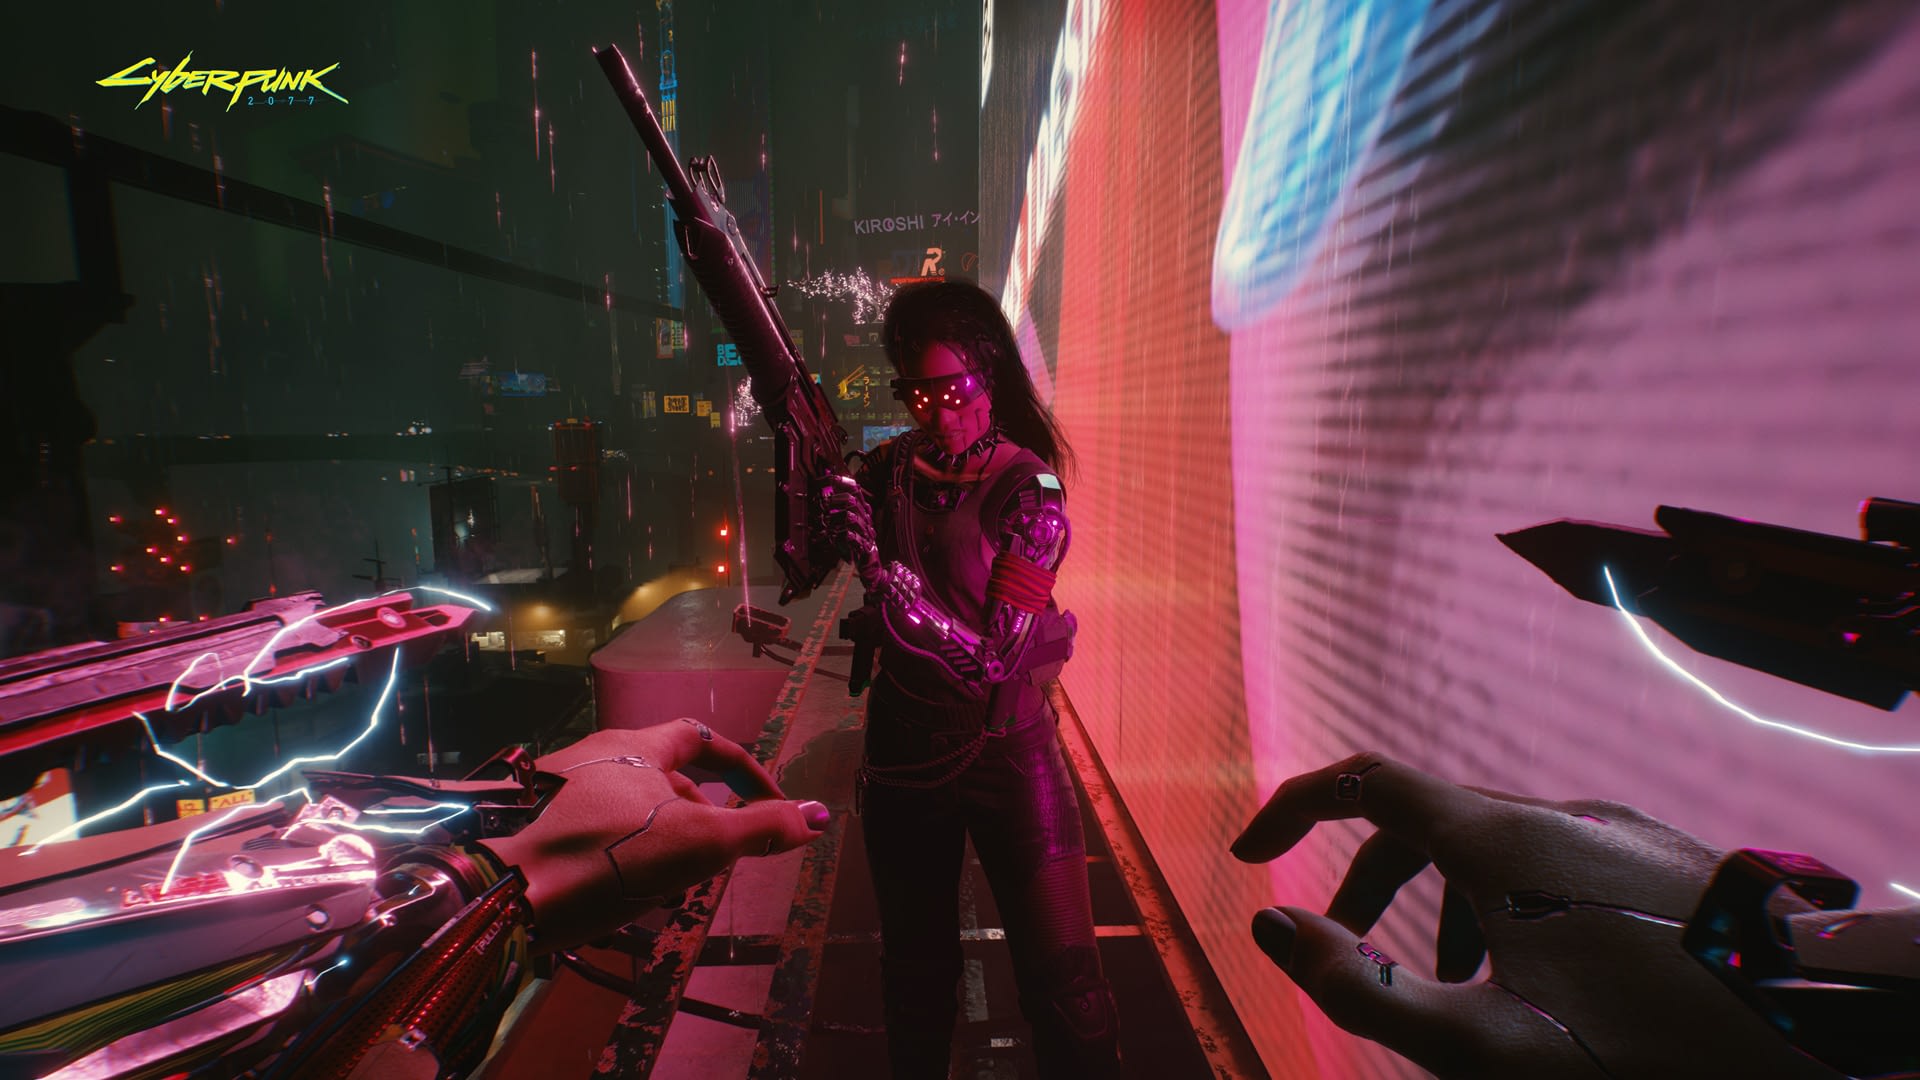 Will Cyberpunk 2077 have Multiplayer?